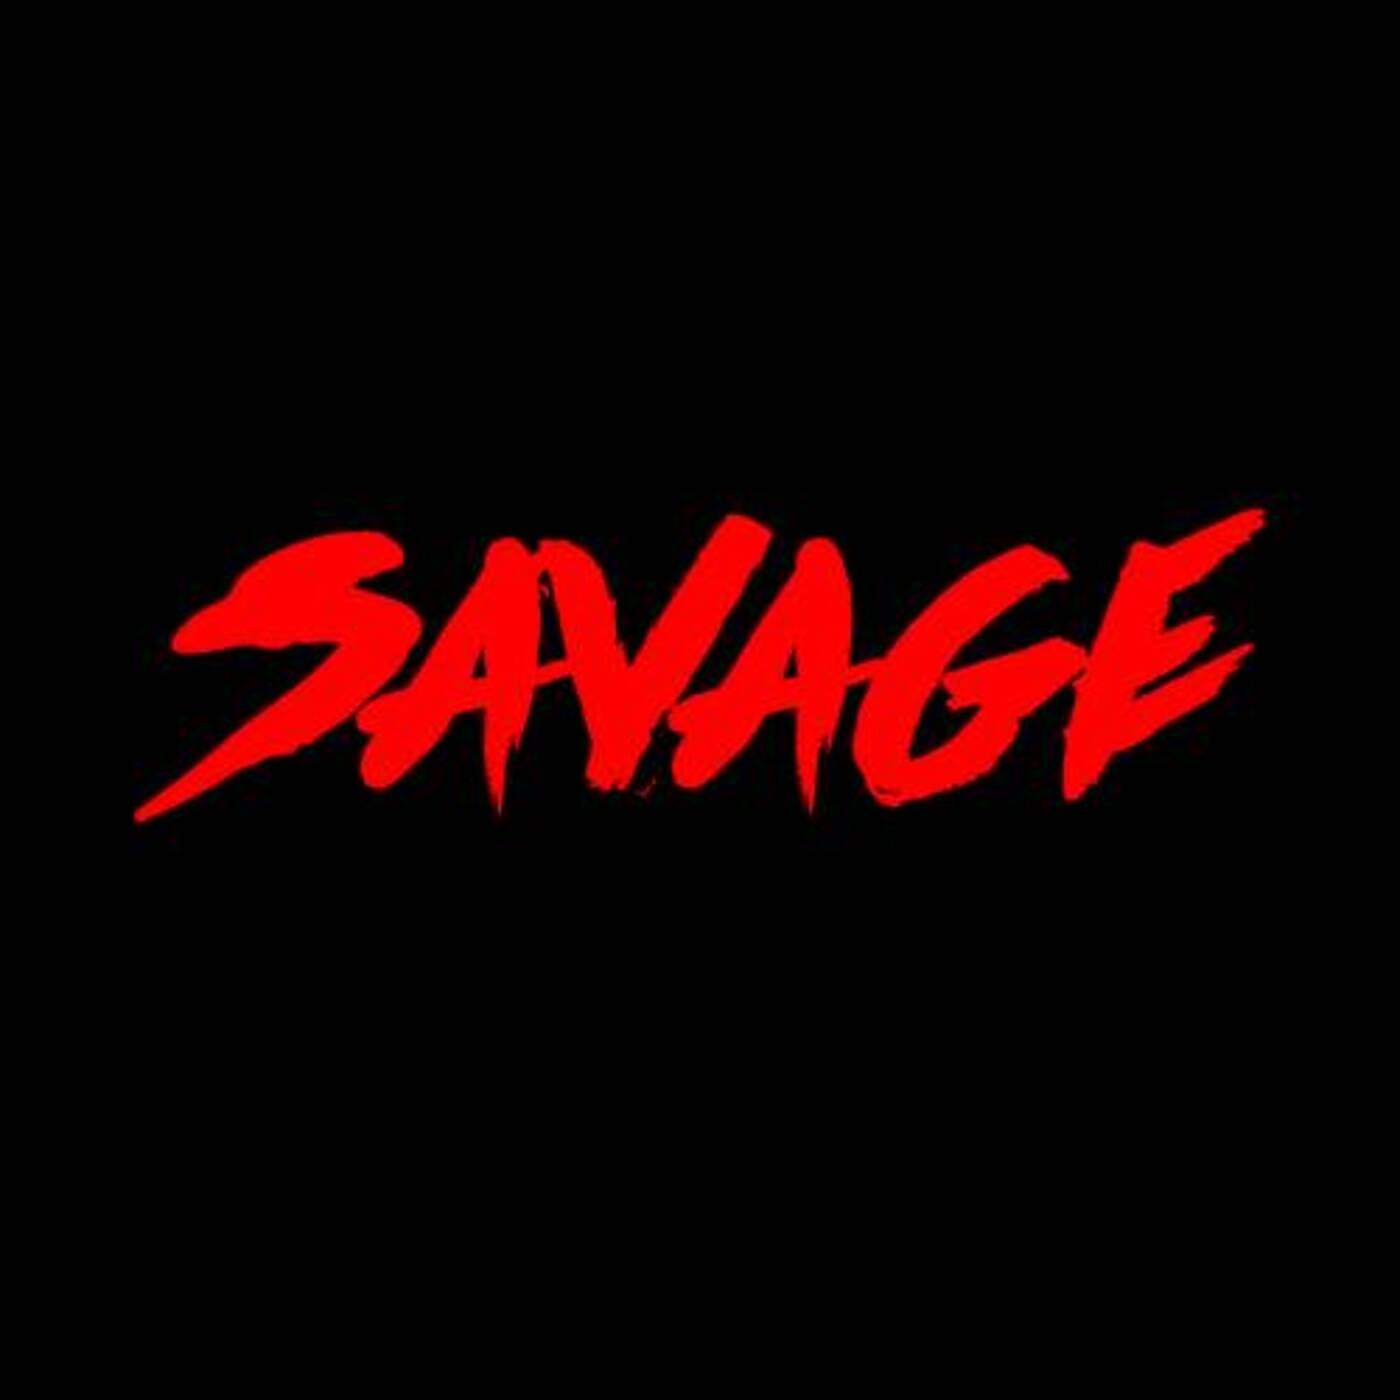 Savage by Bahari on Beatsource